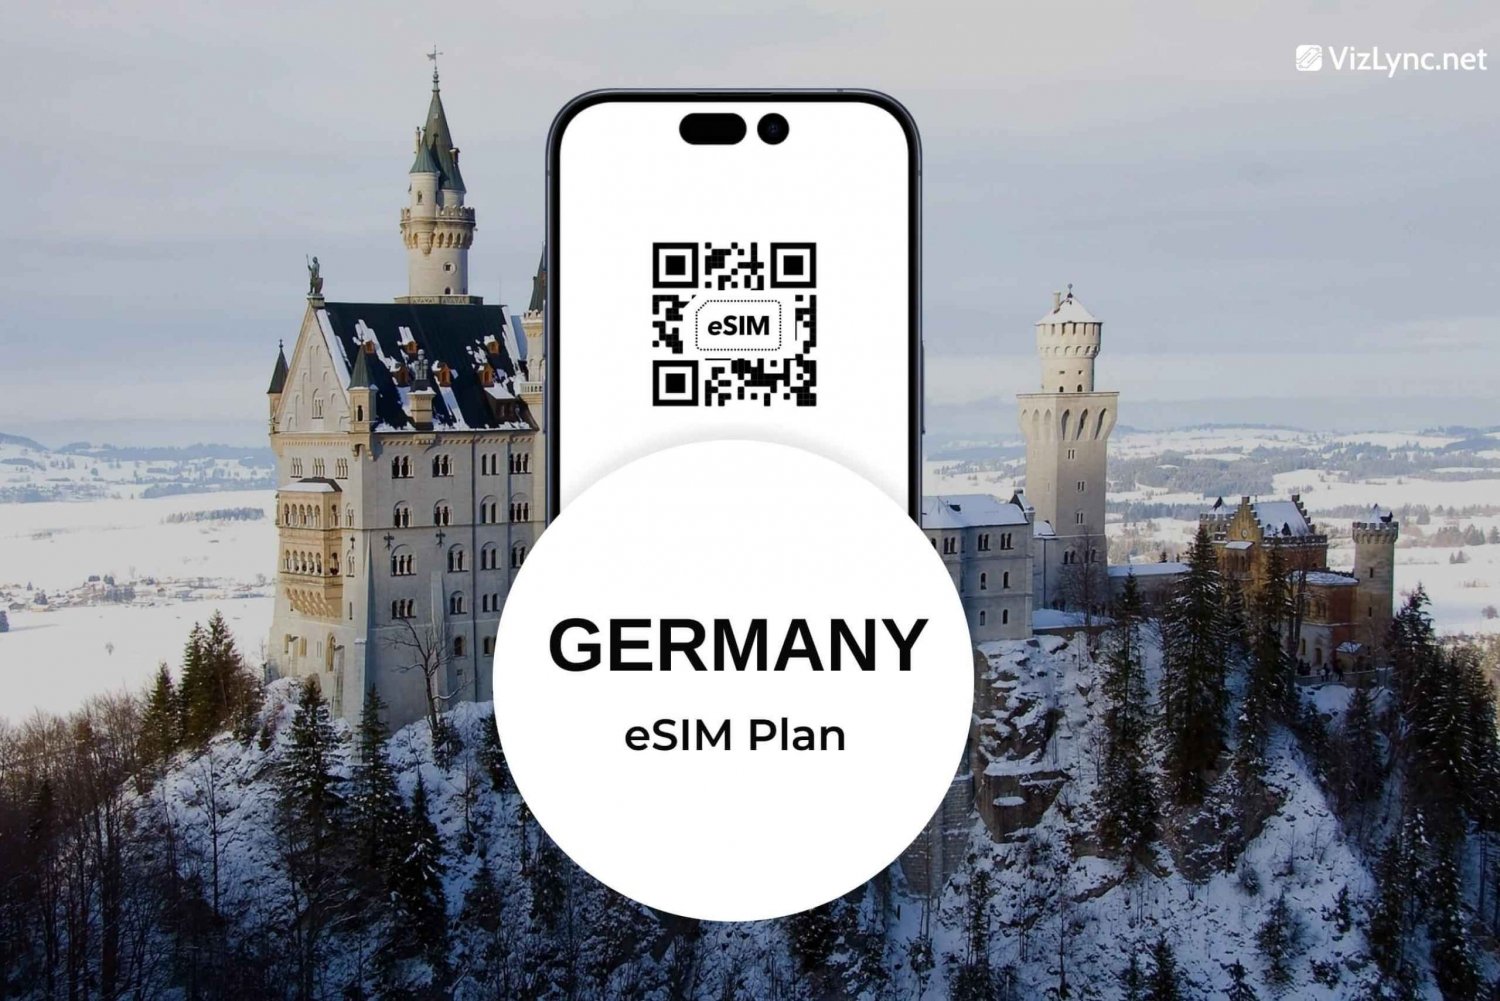 Tysklands eSIM-dataplaner med superraske mobildataalternativer